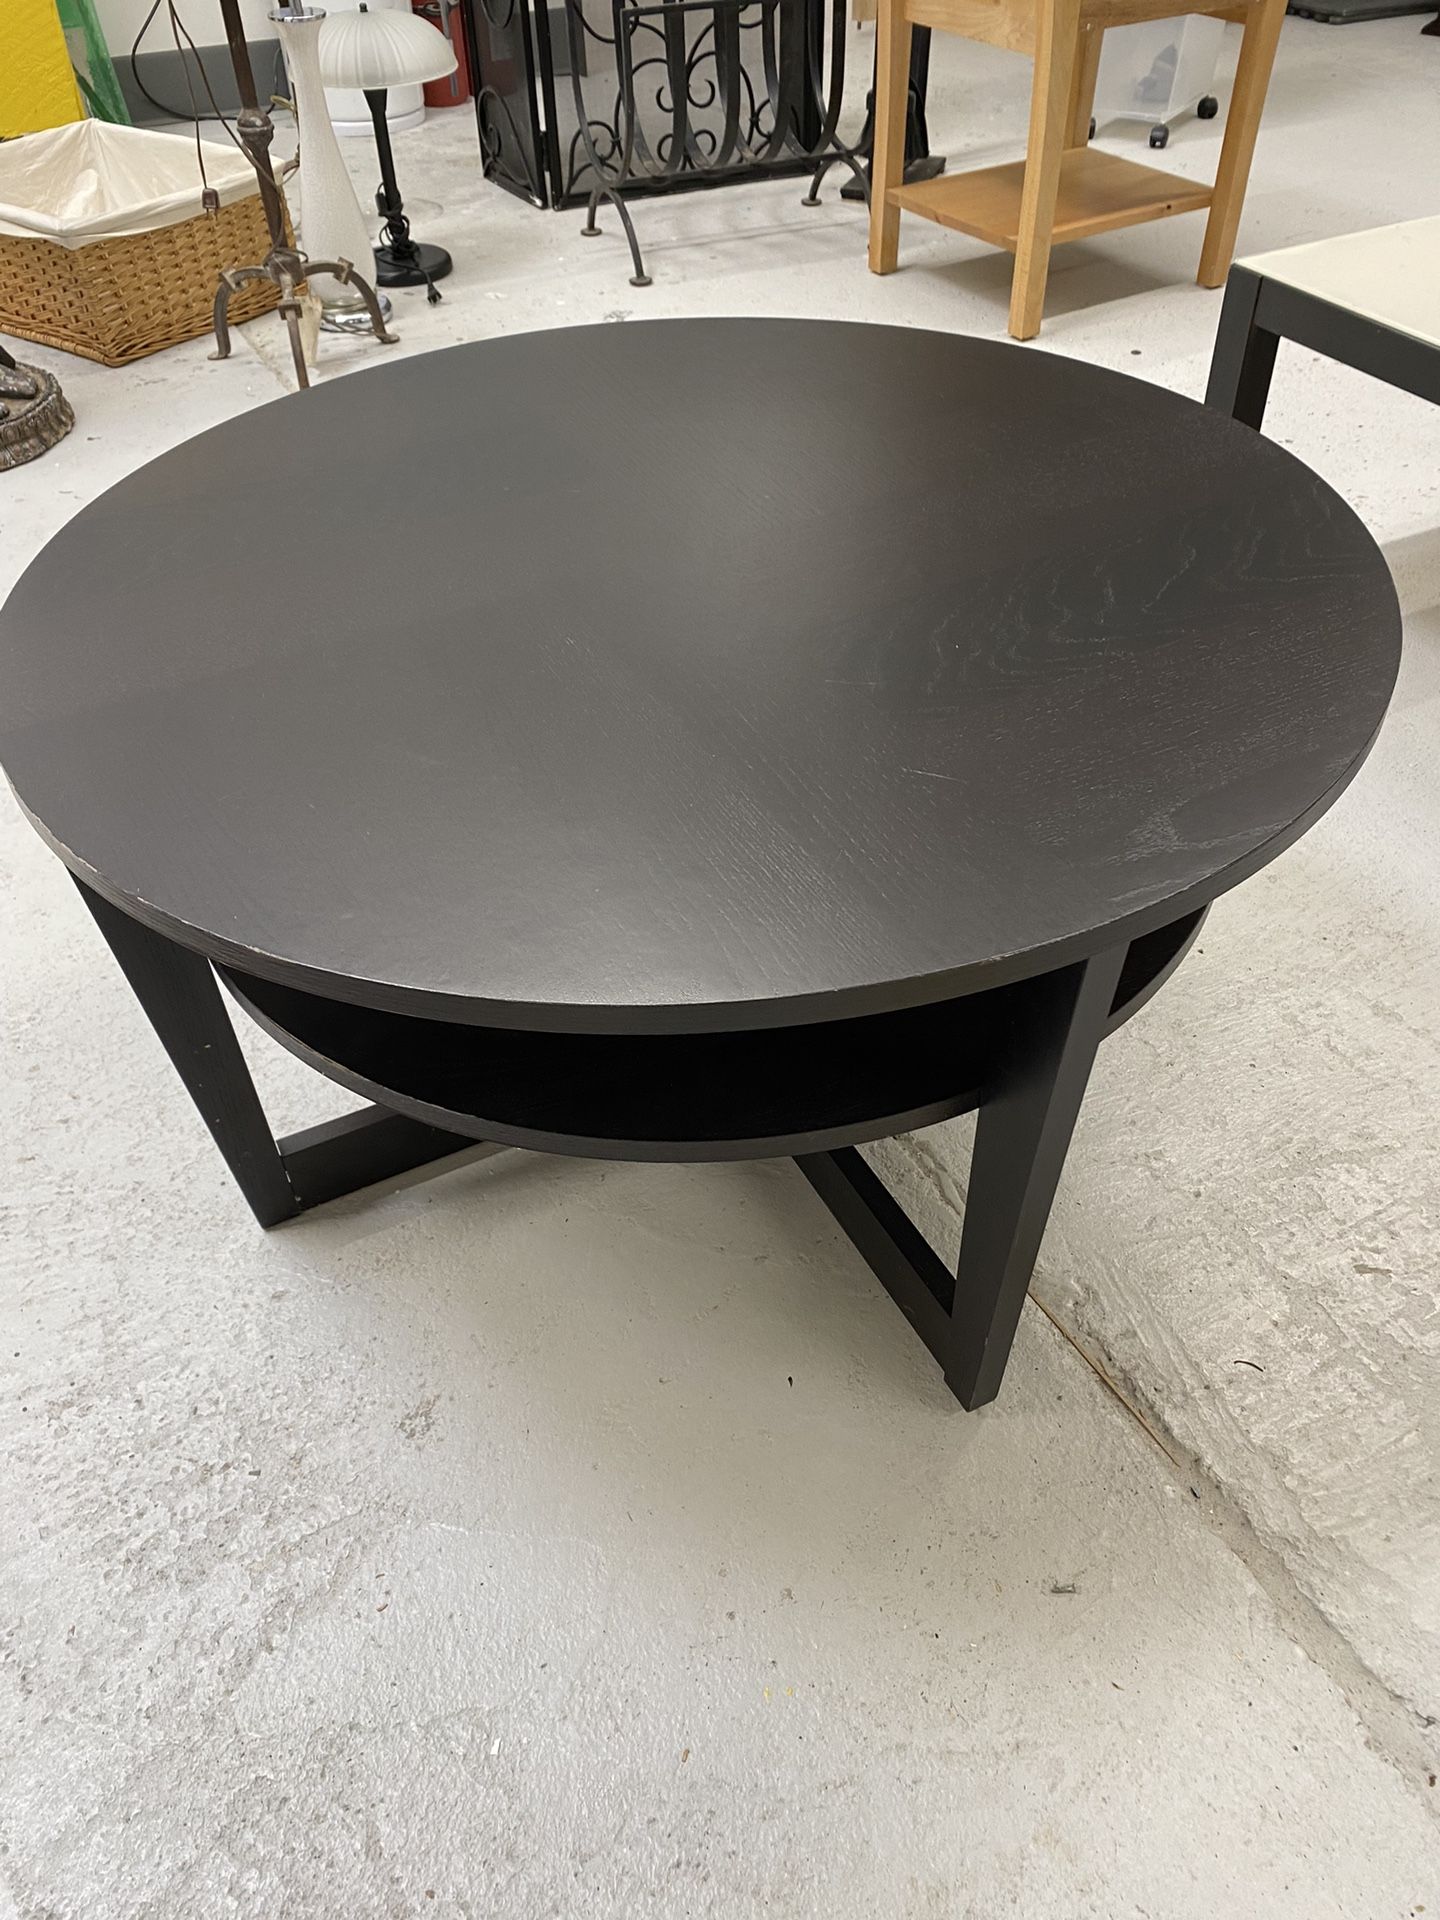 IKEA Round Coffee Table